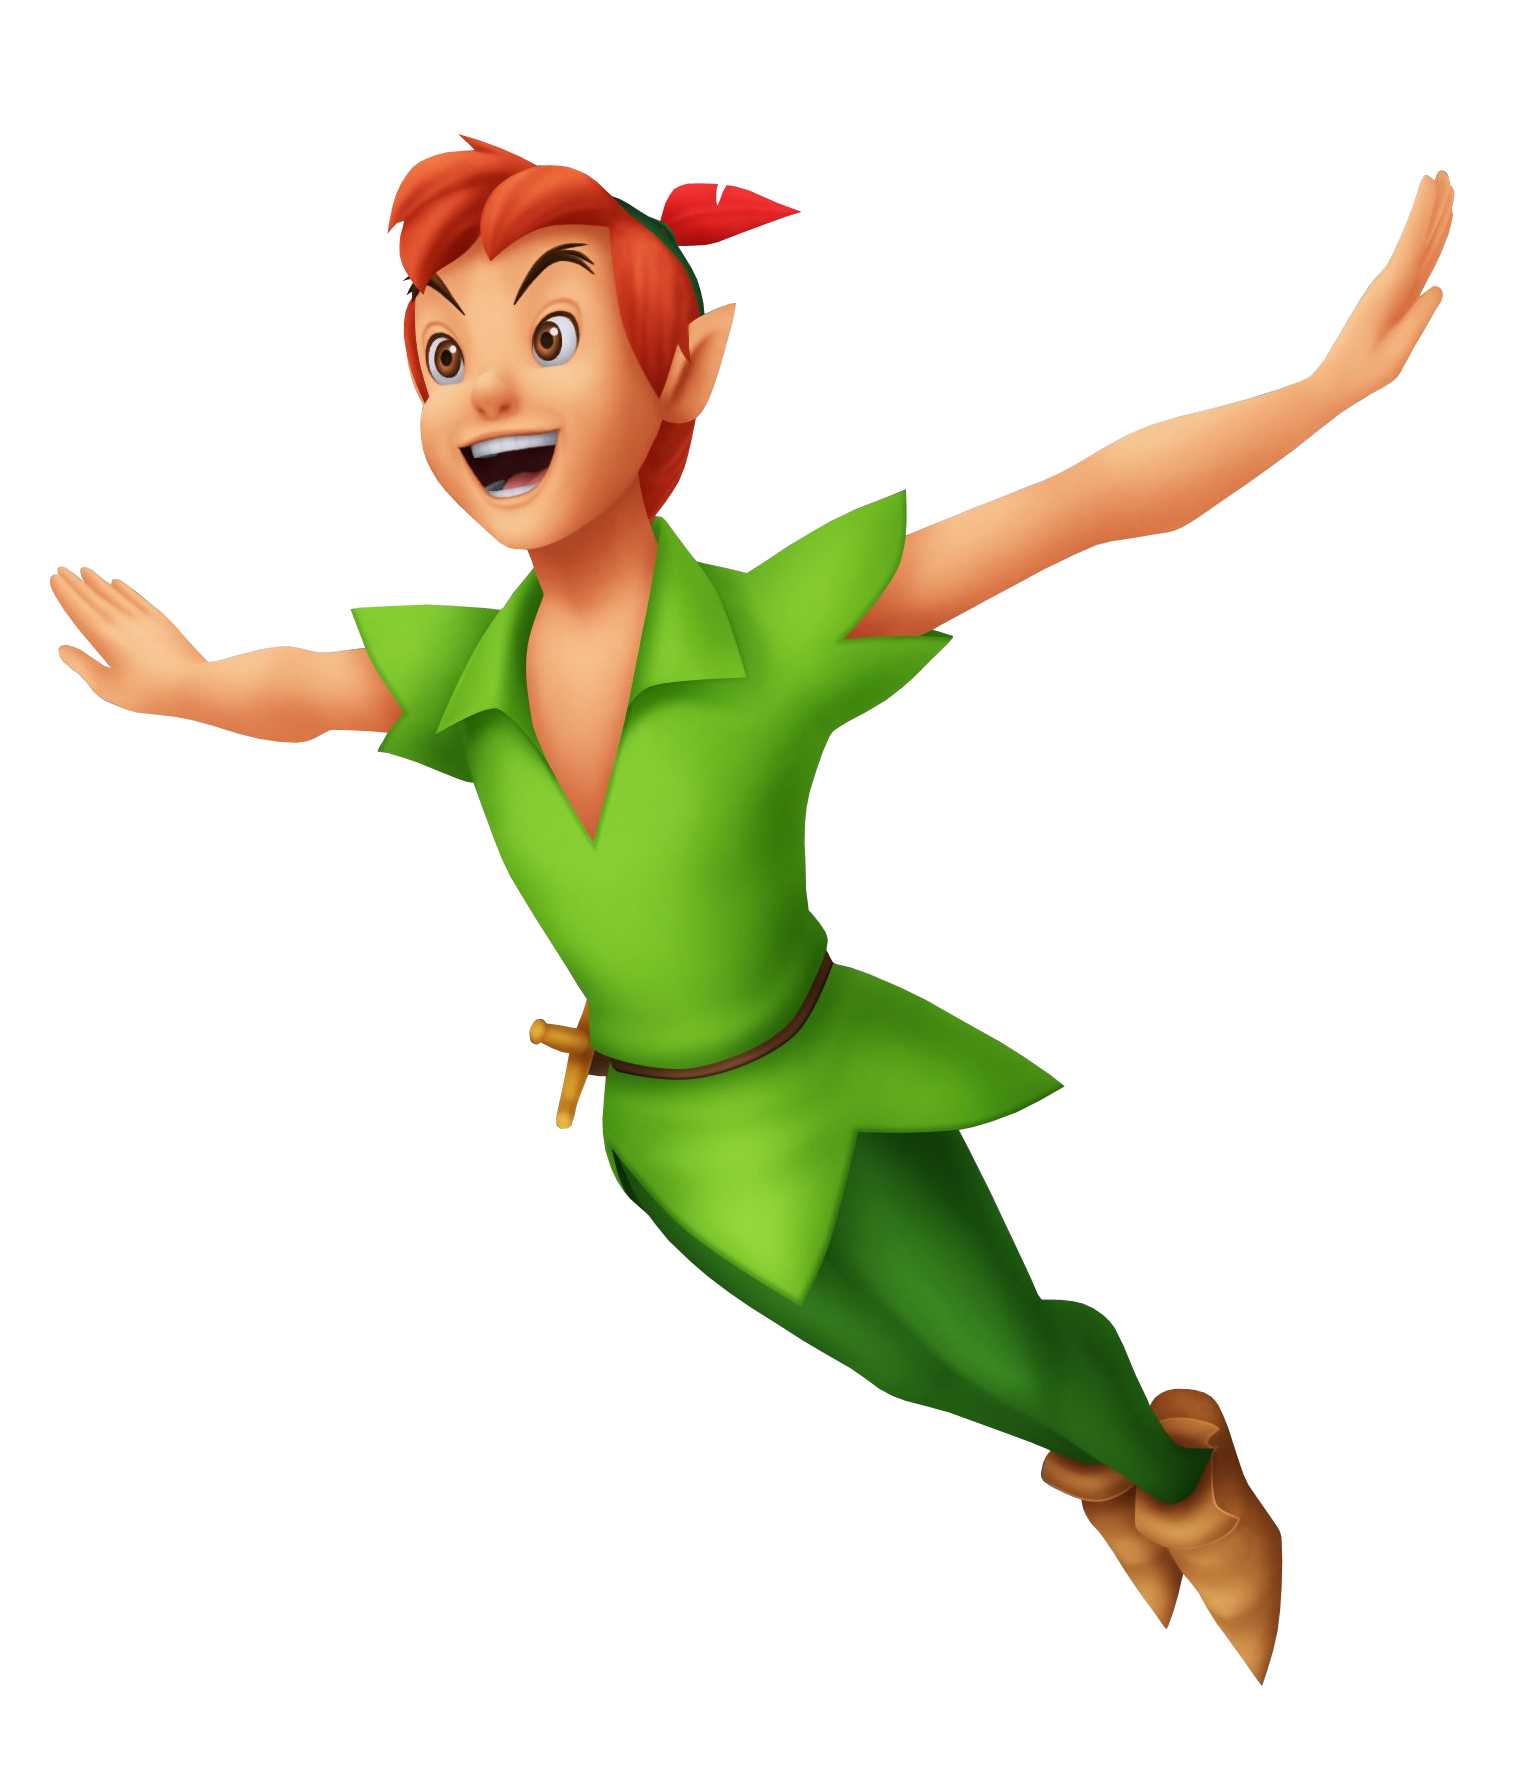 Character01 - Peter Pan